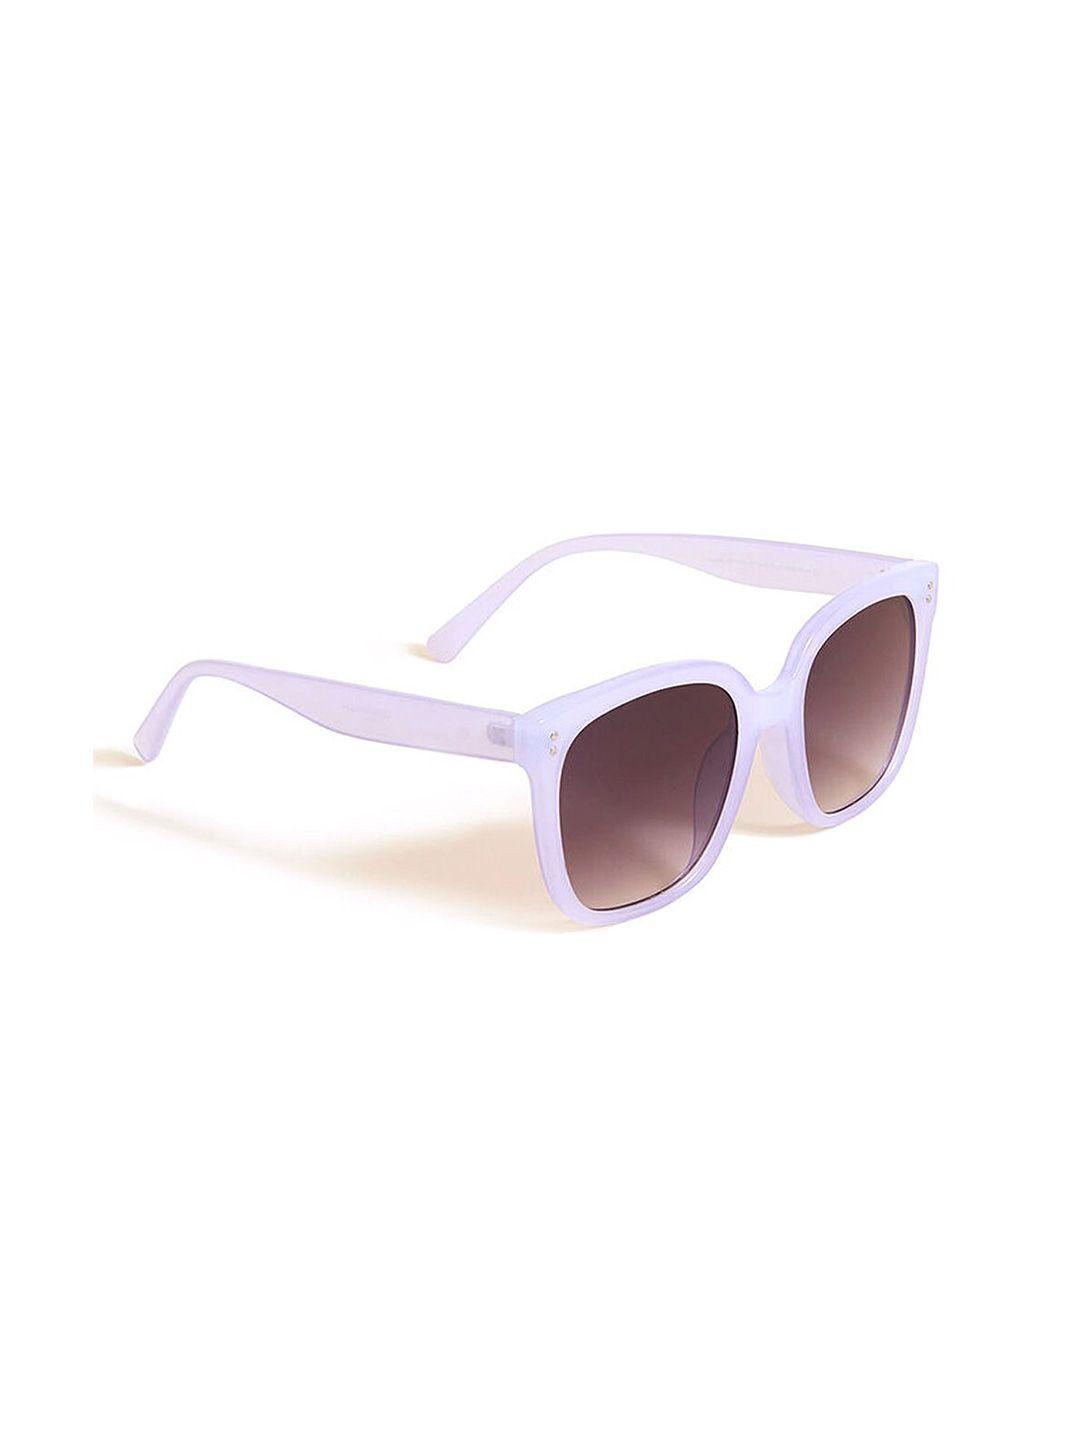 accessorize women lens & purple wayfarer sunglasses with uv protected lens ma-59303069001